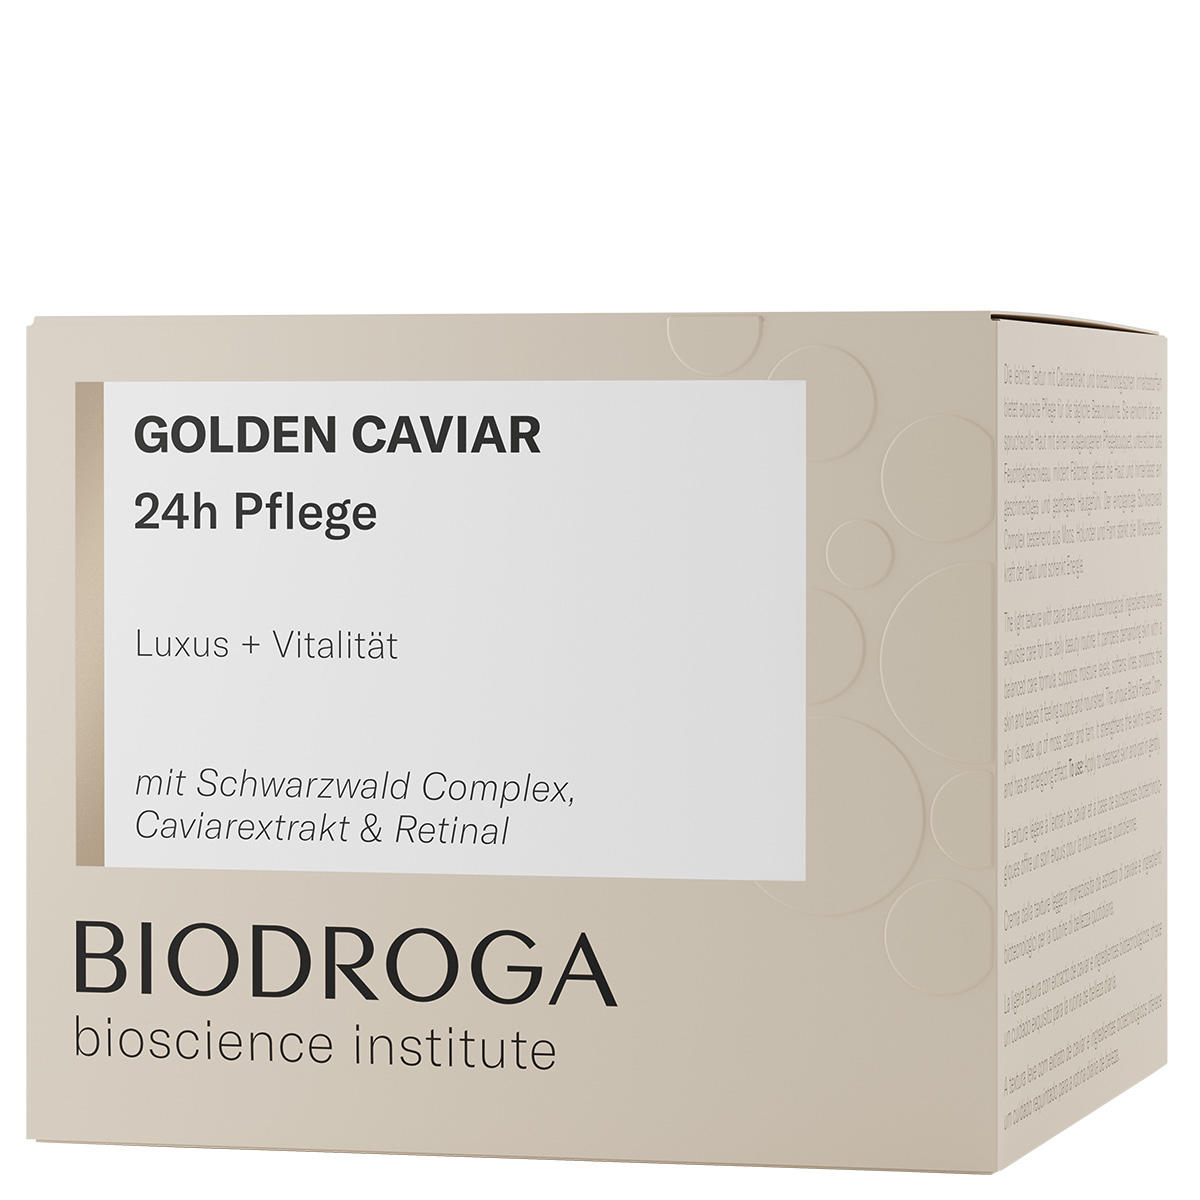 BIODROGA Bioscience Institute GOLDEN CAVIAR Atención 24 horas 50 ml - 2